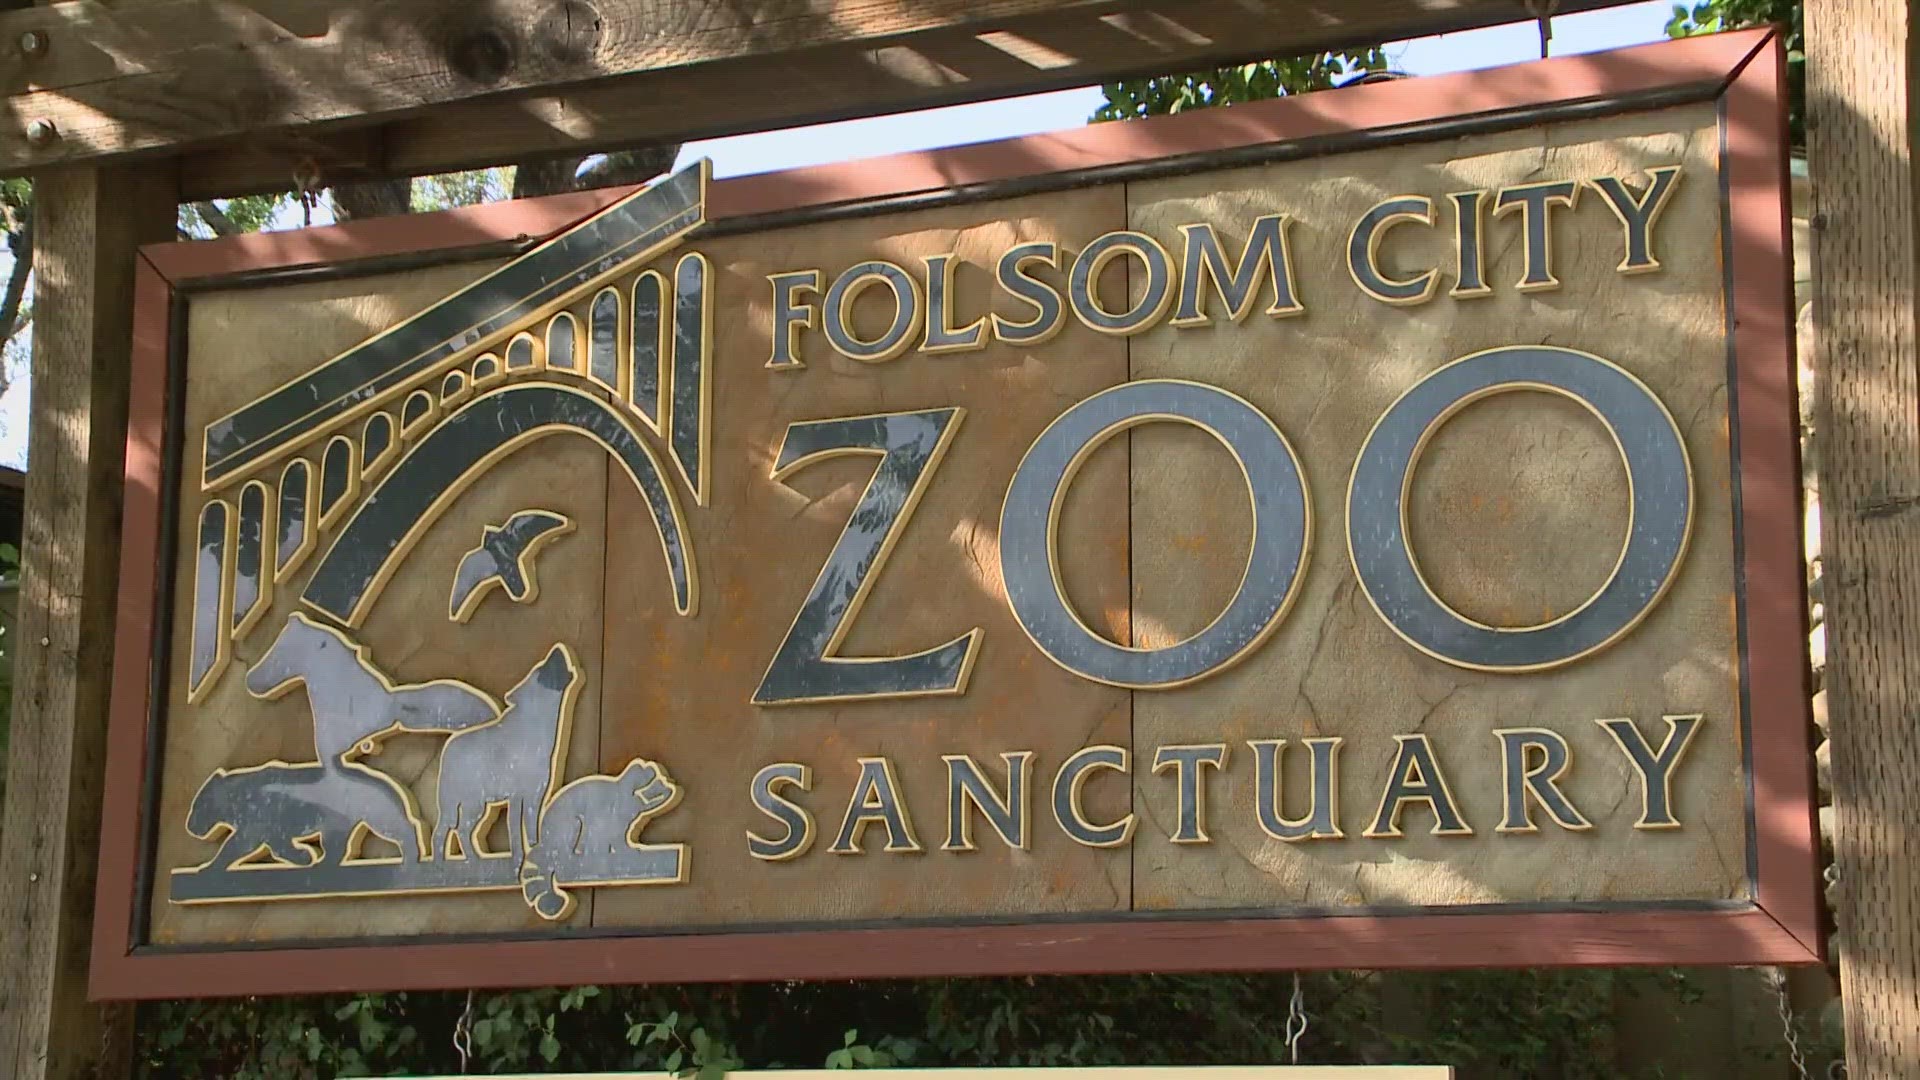 Folsom City Zoo Sanctuary facing fines for fences abc10